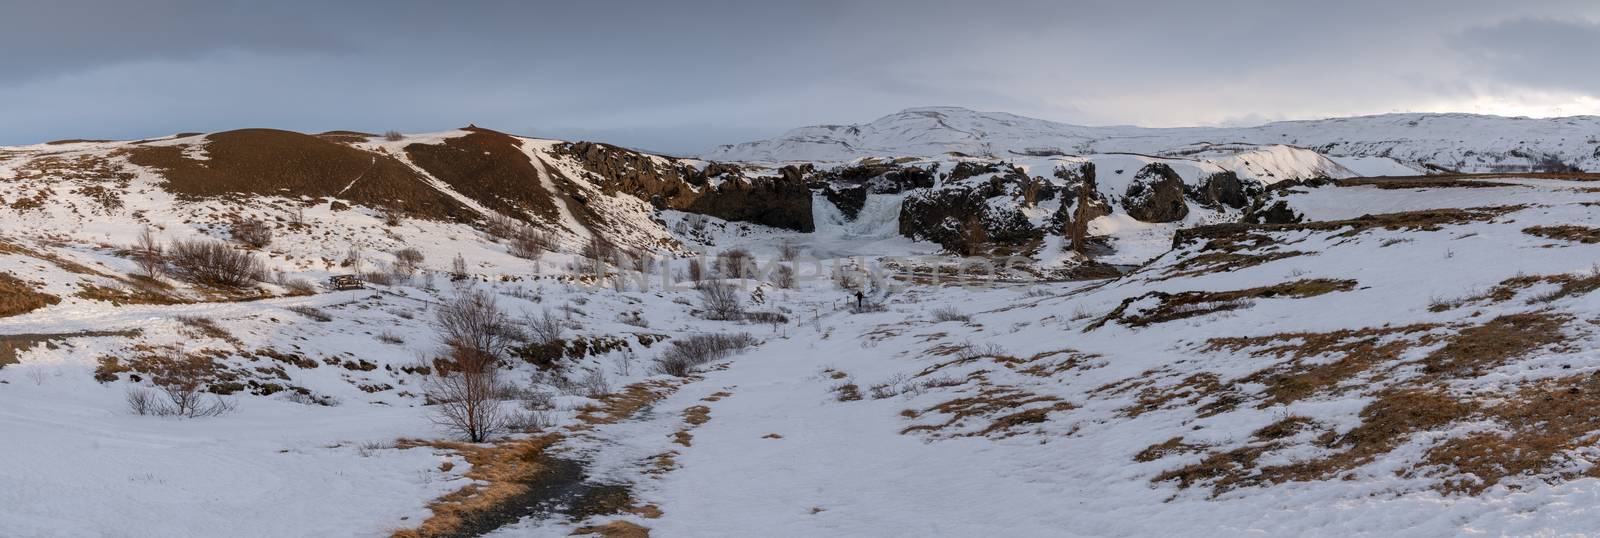 Hjalparfoss waterfall, Iceland, Europe by alfotokunst